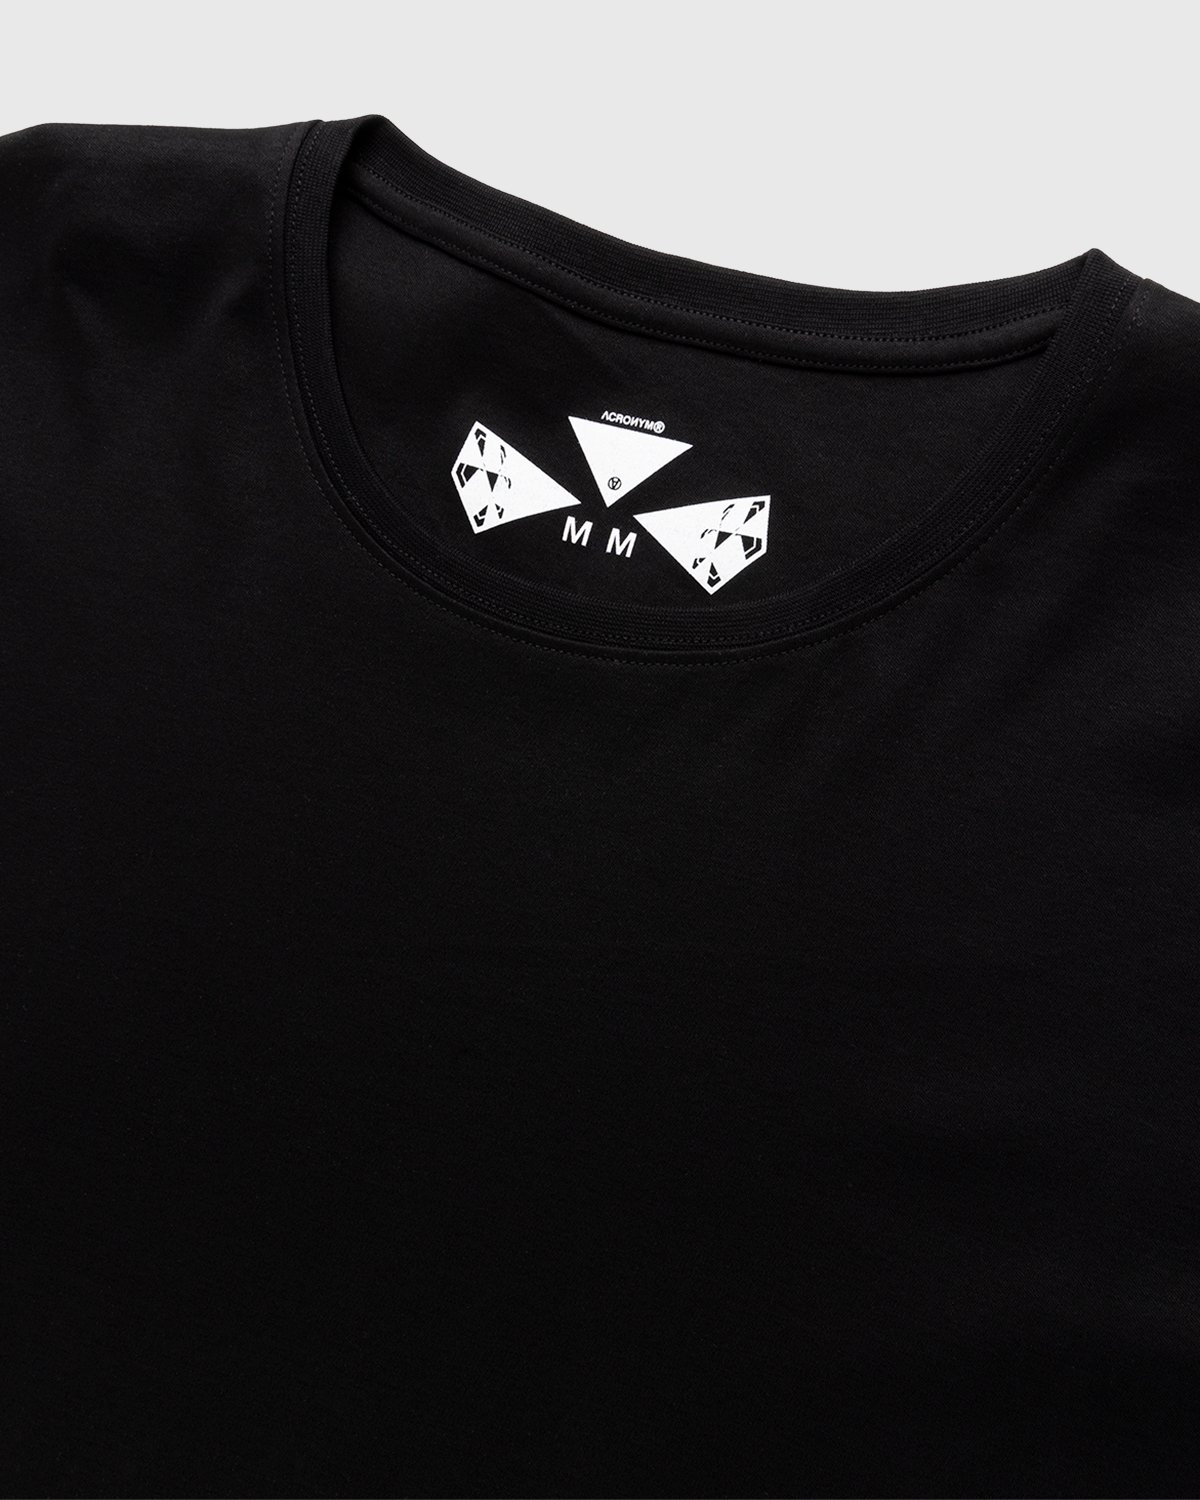 ACRONYM - S24-PR-A T-Shirt Black - Clothing - Black - Image 4